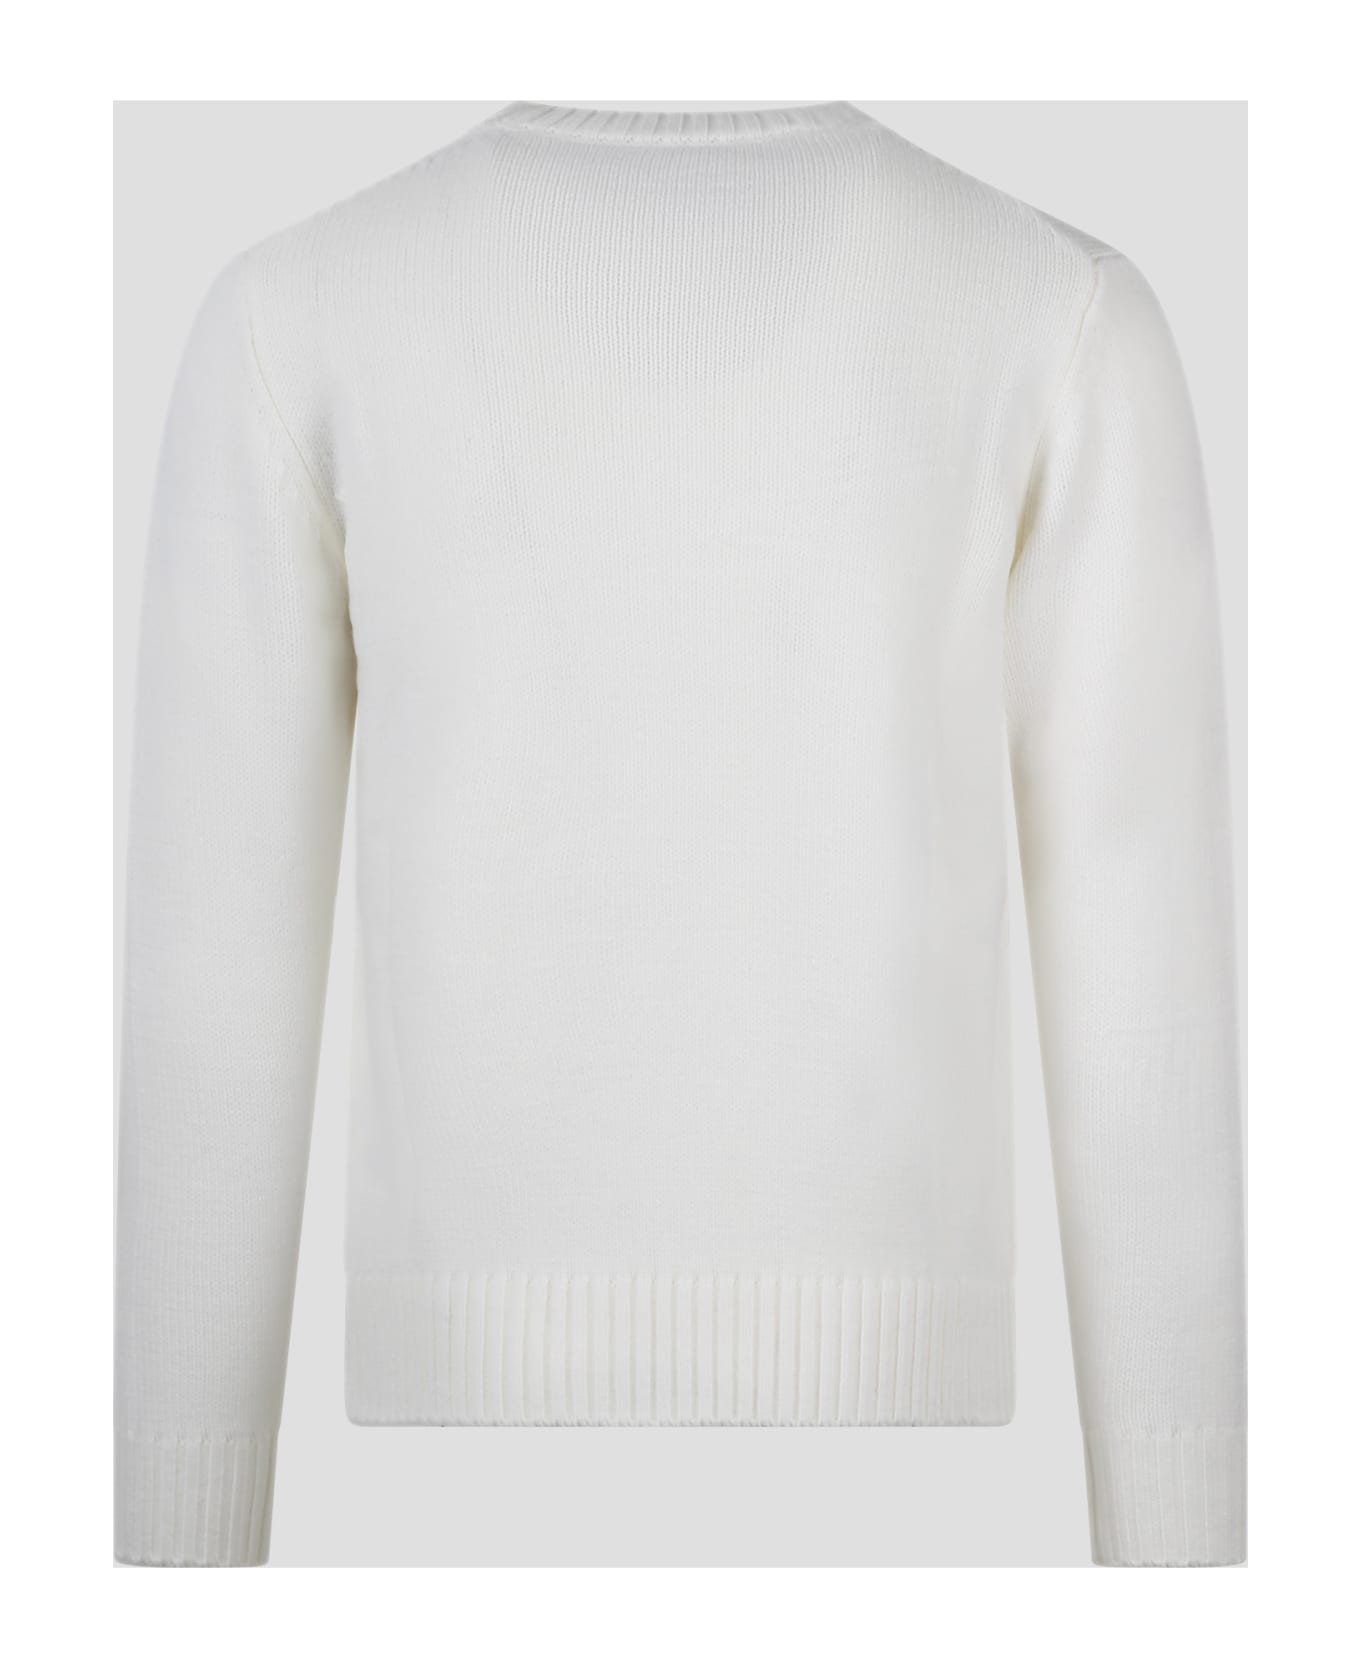 Paolo Pecora Crewneck Sweater - White